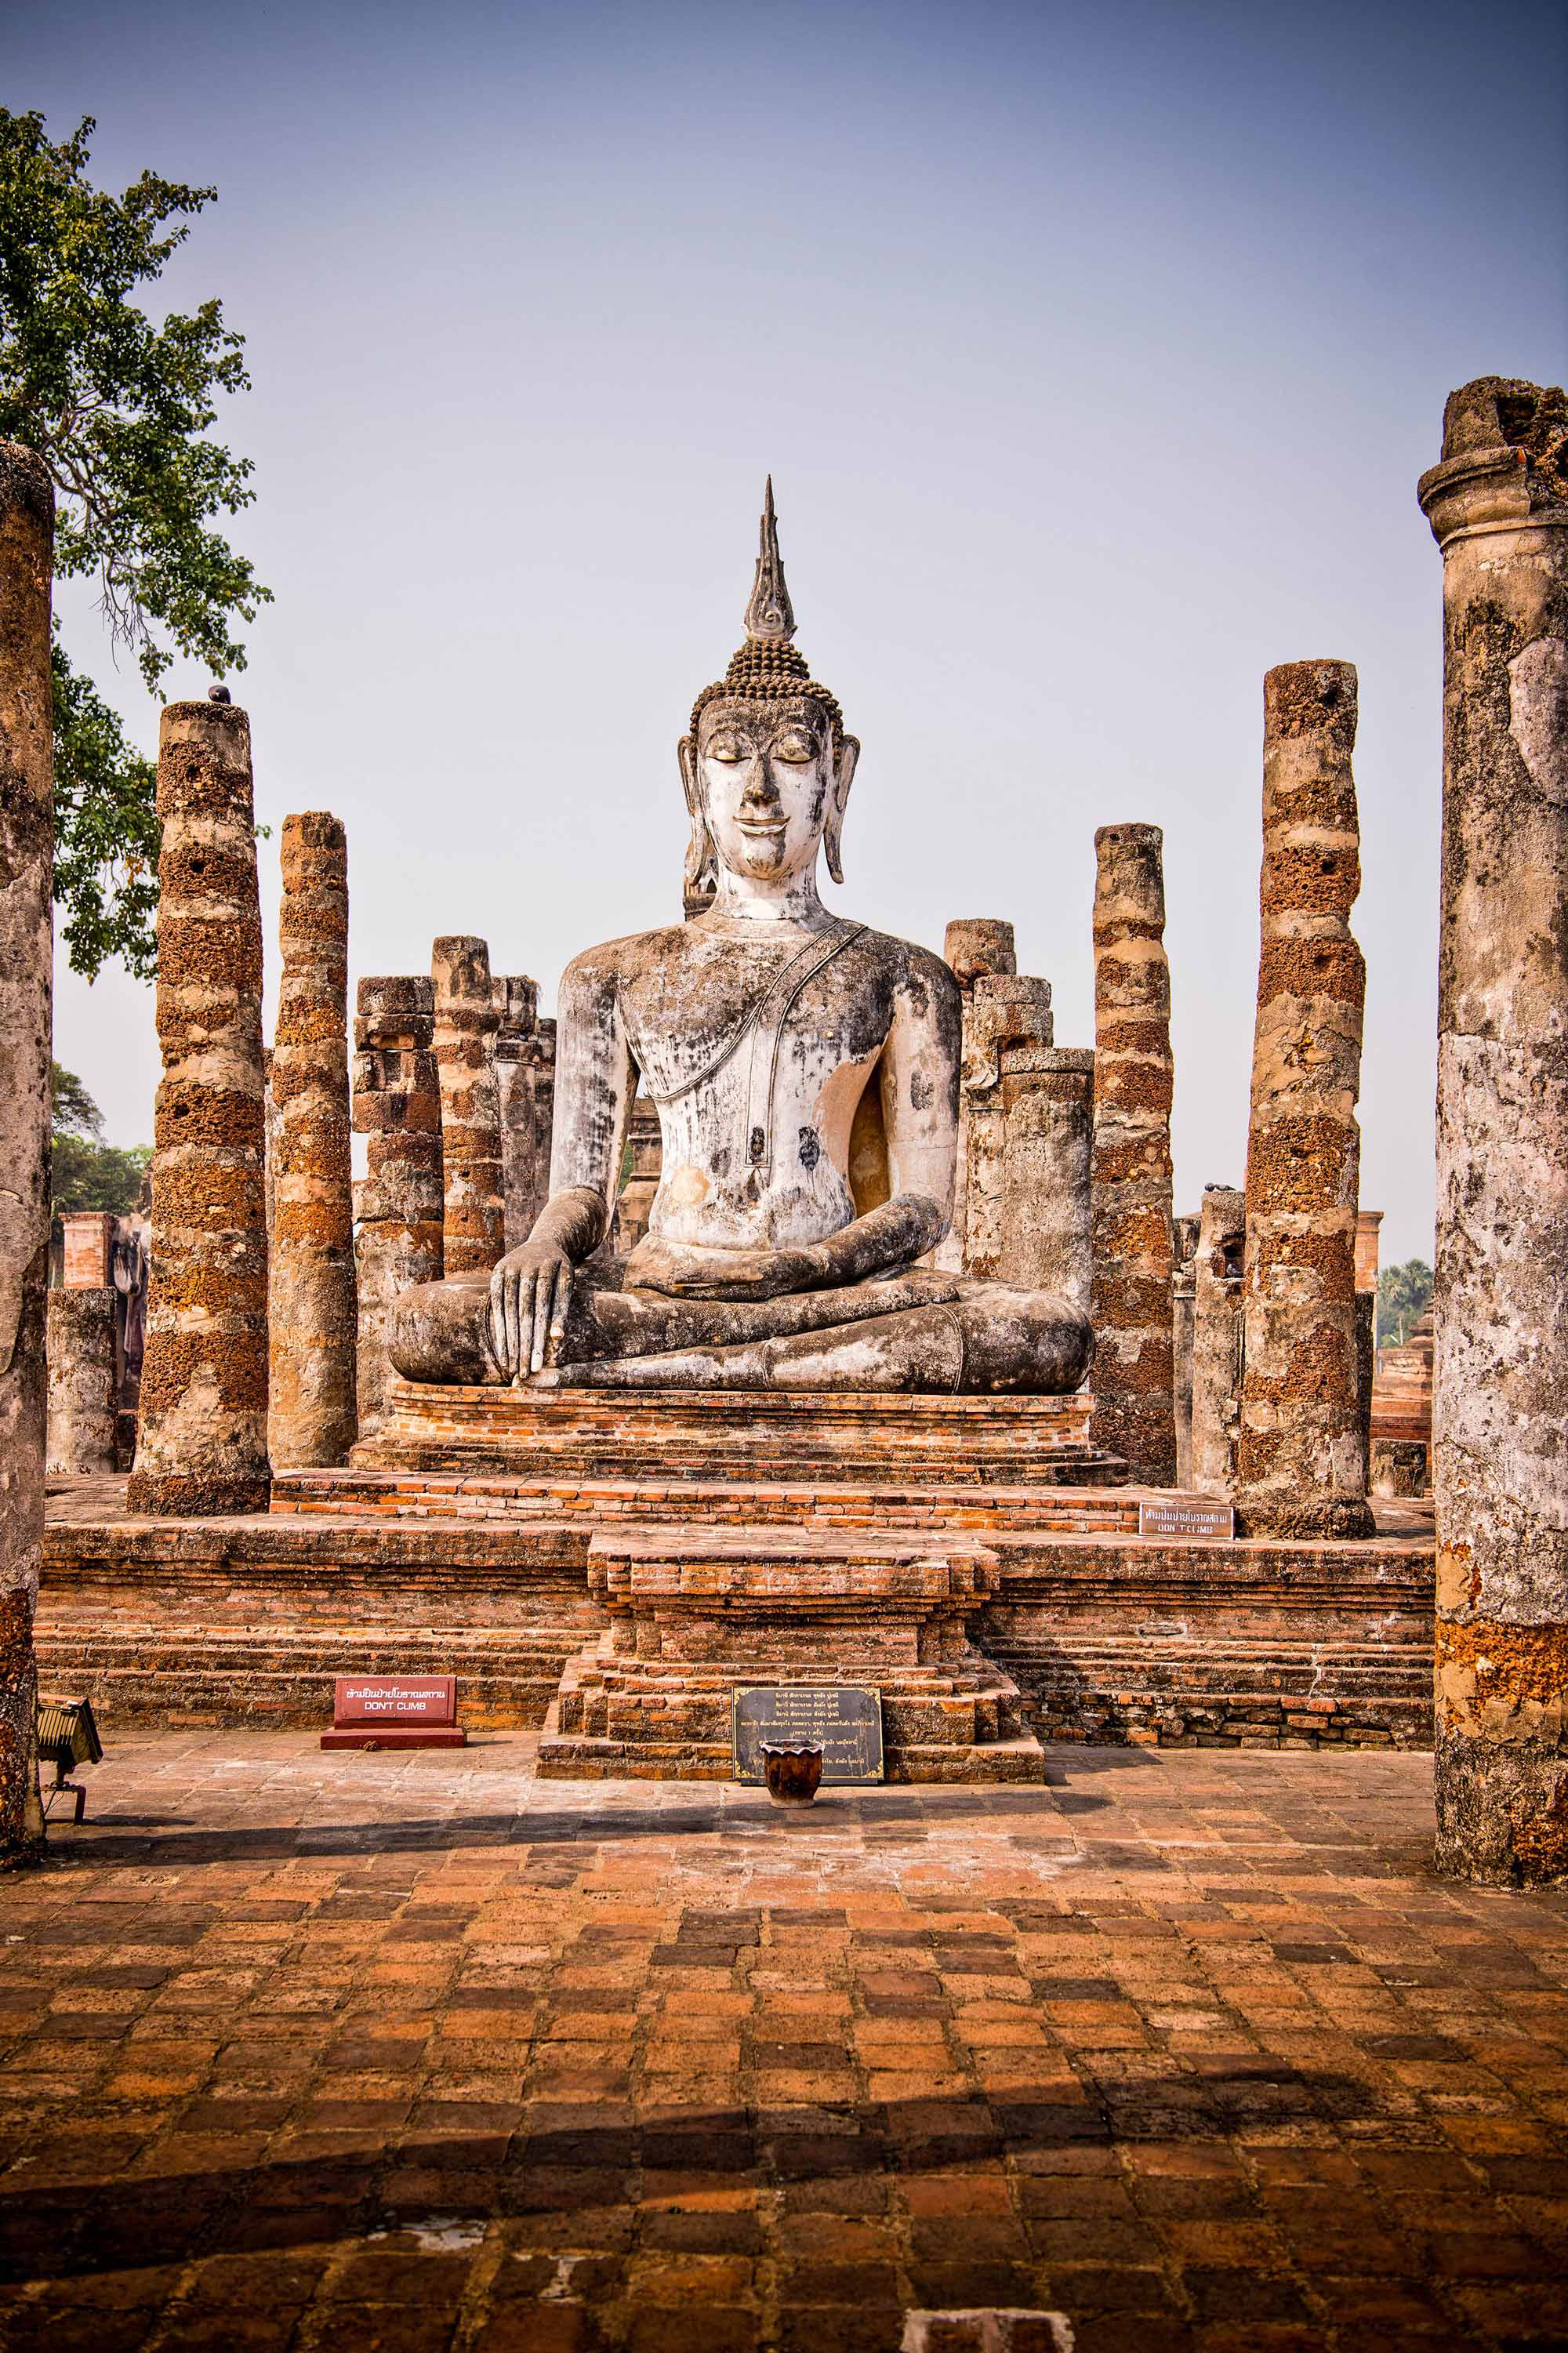 Huge Buddha statue between pillars